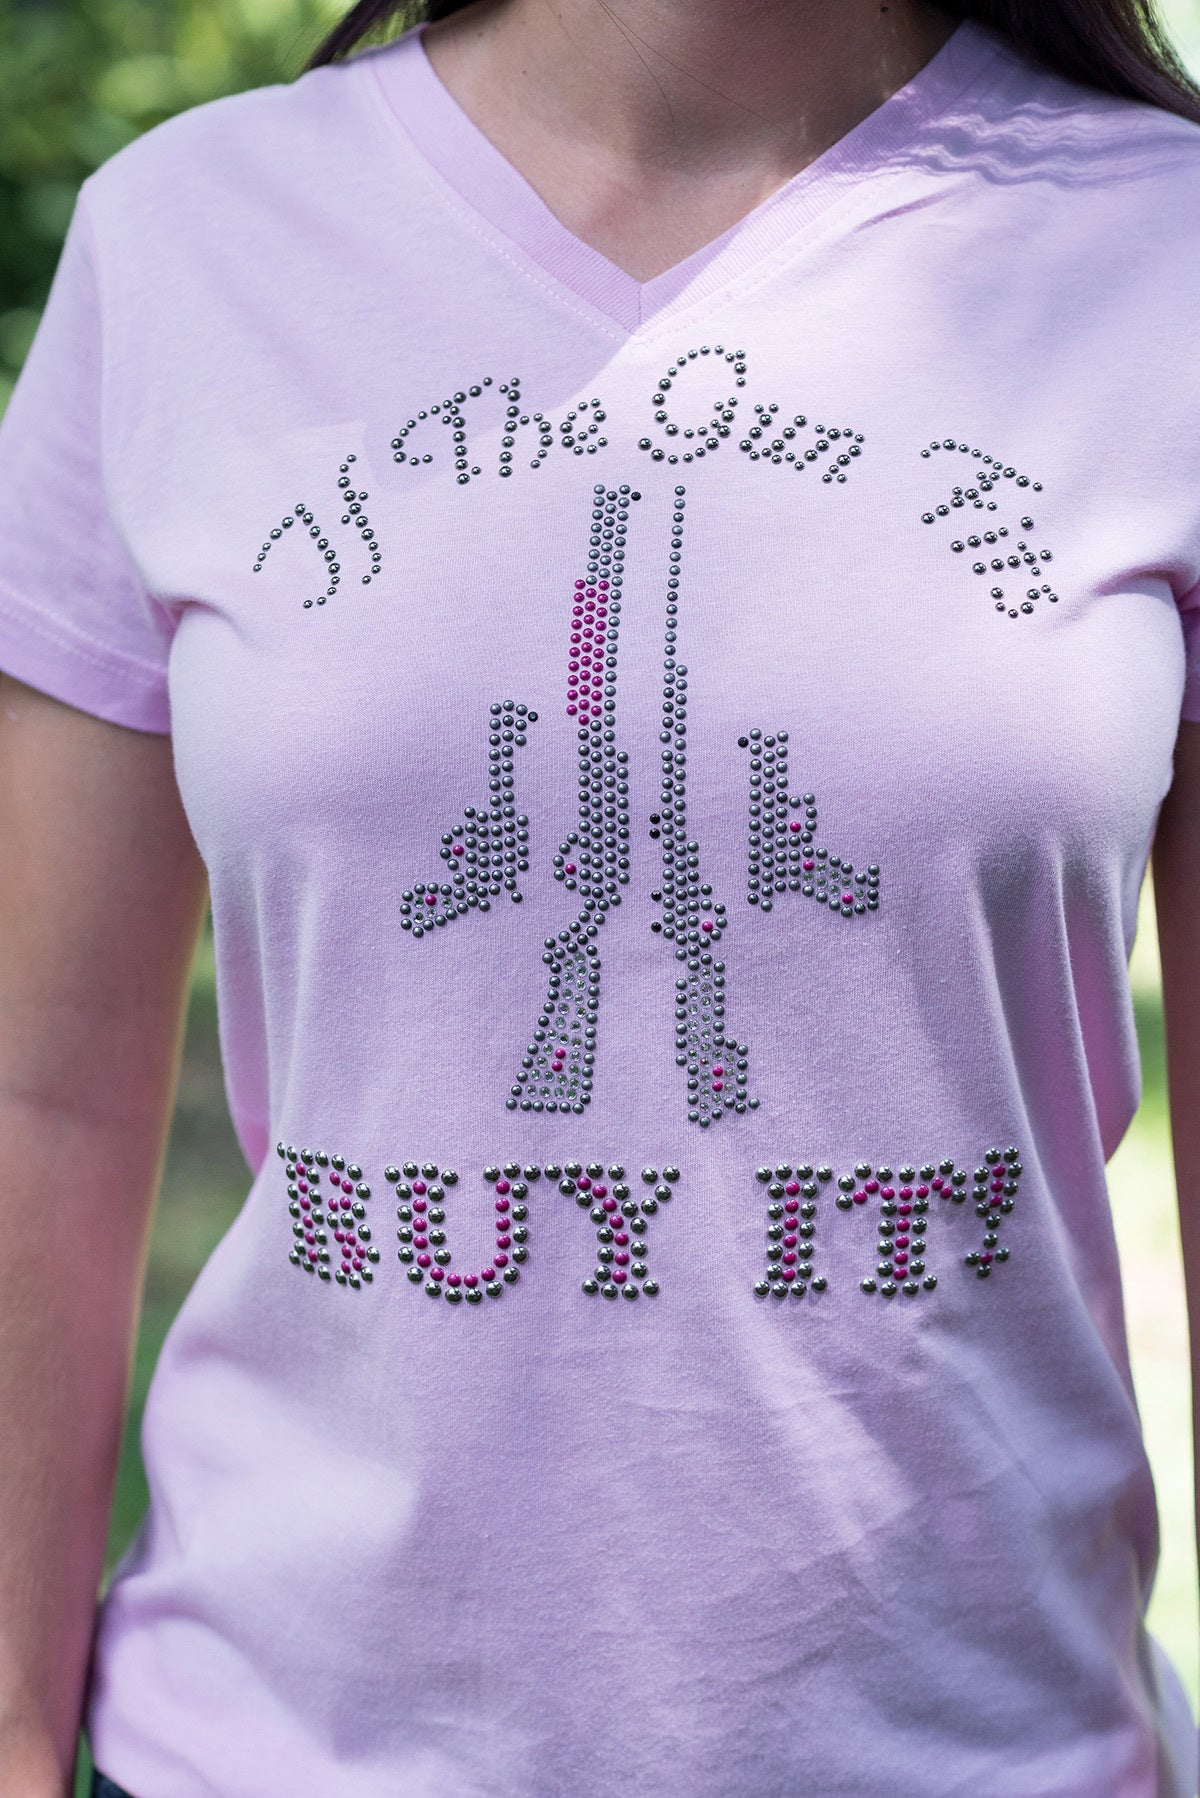 If The Gun Fits Buy It!